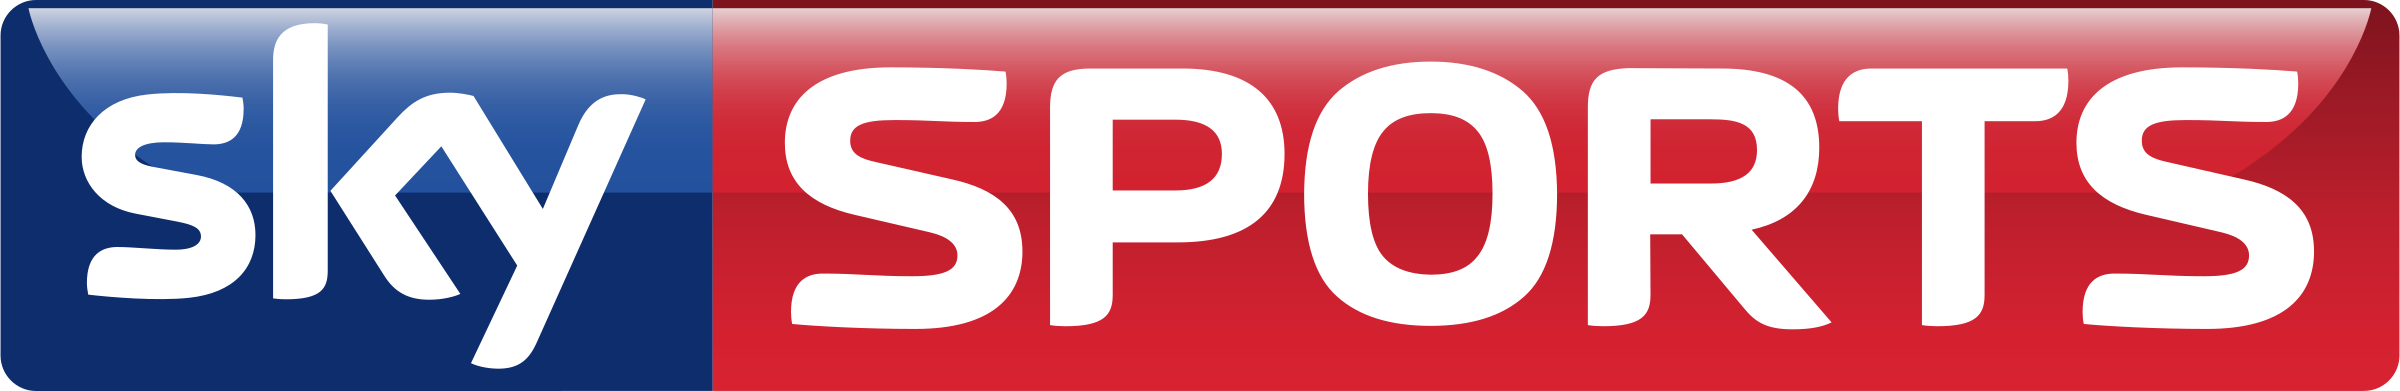 Sky Sports Logo PNG - 176431